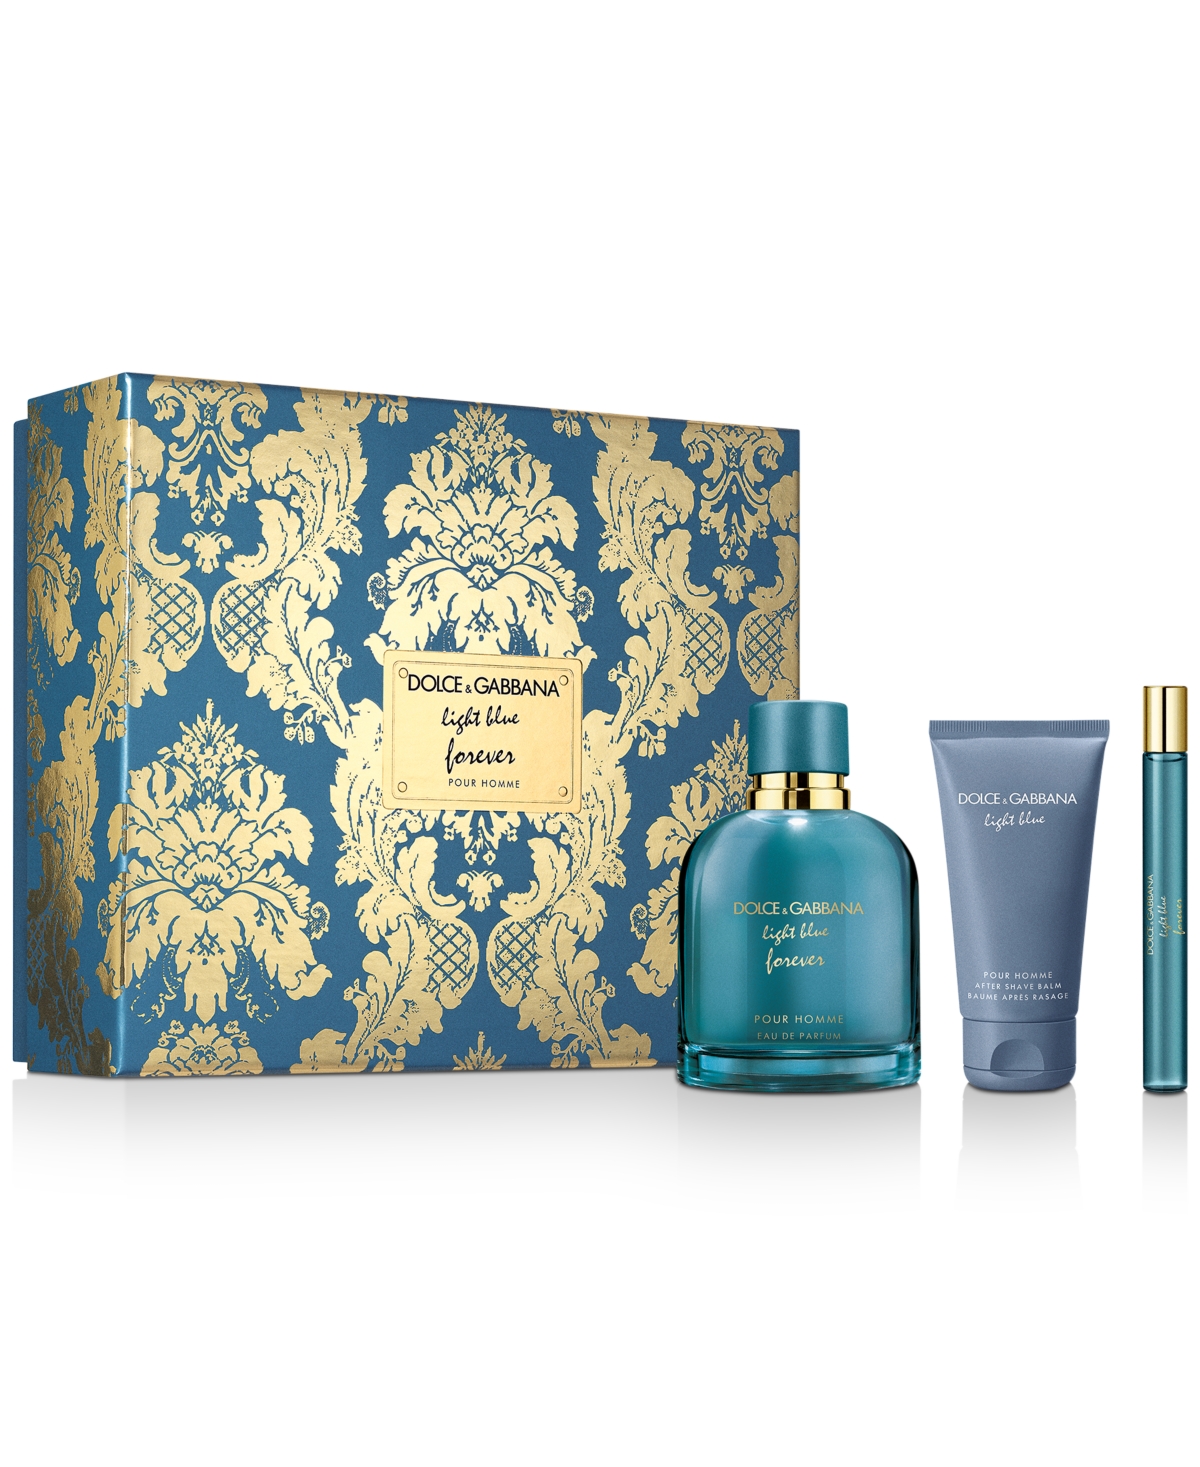  Dolce & Gabbana Light Blue Intense Eau de Parfum Spray for  Men, 1.6 Ounce : Beauty & Personal Care